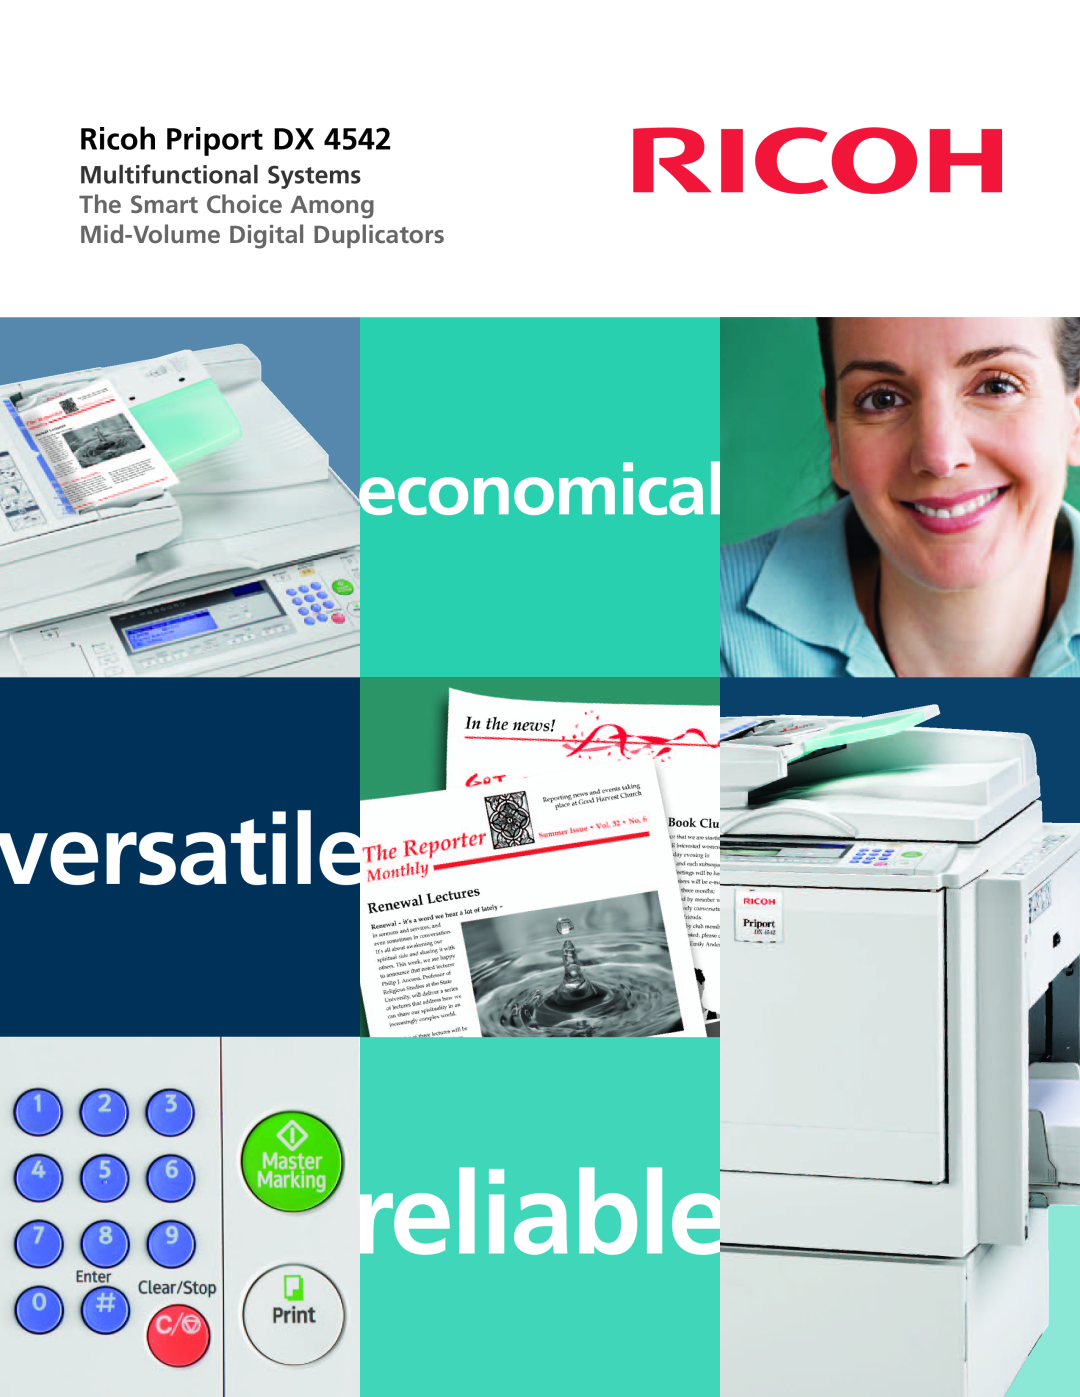 Ricoh DX 4542 manual reliable, versatile, economical, Ricoh Priport DX, Multifunctional Systems 